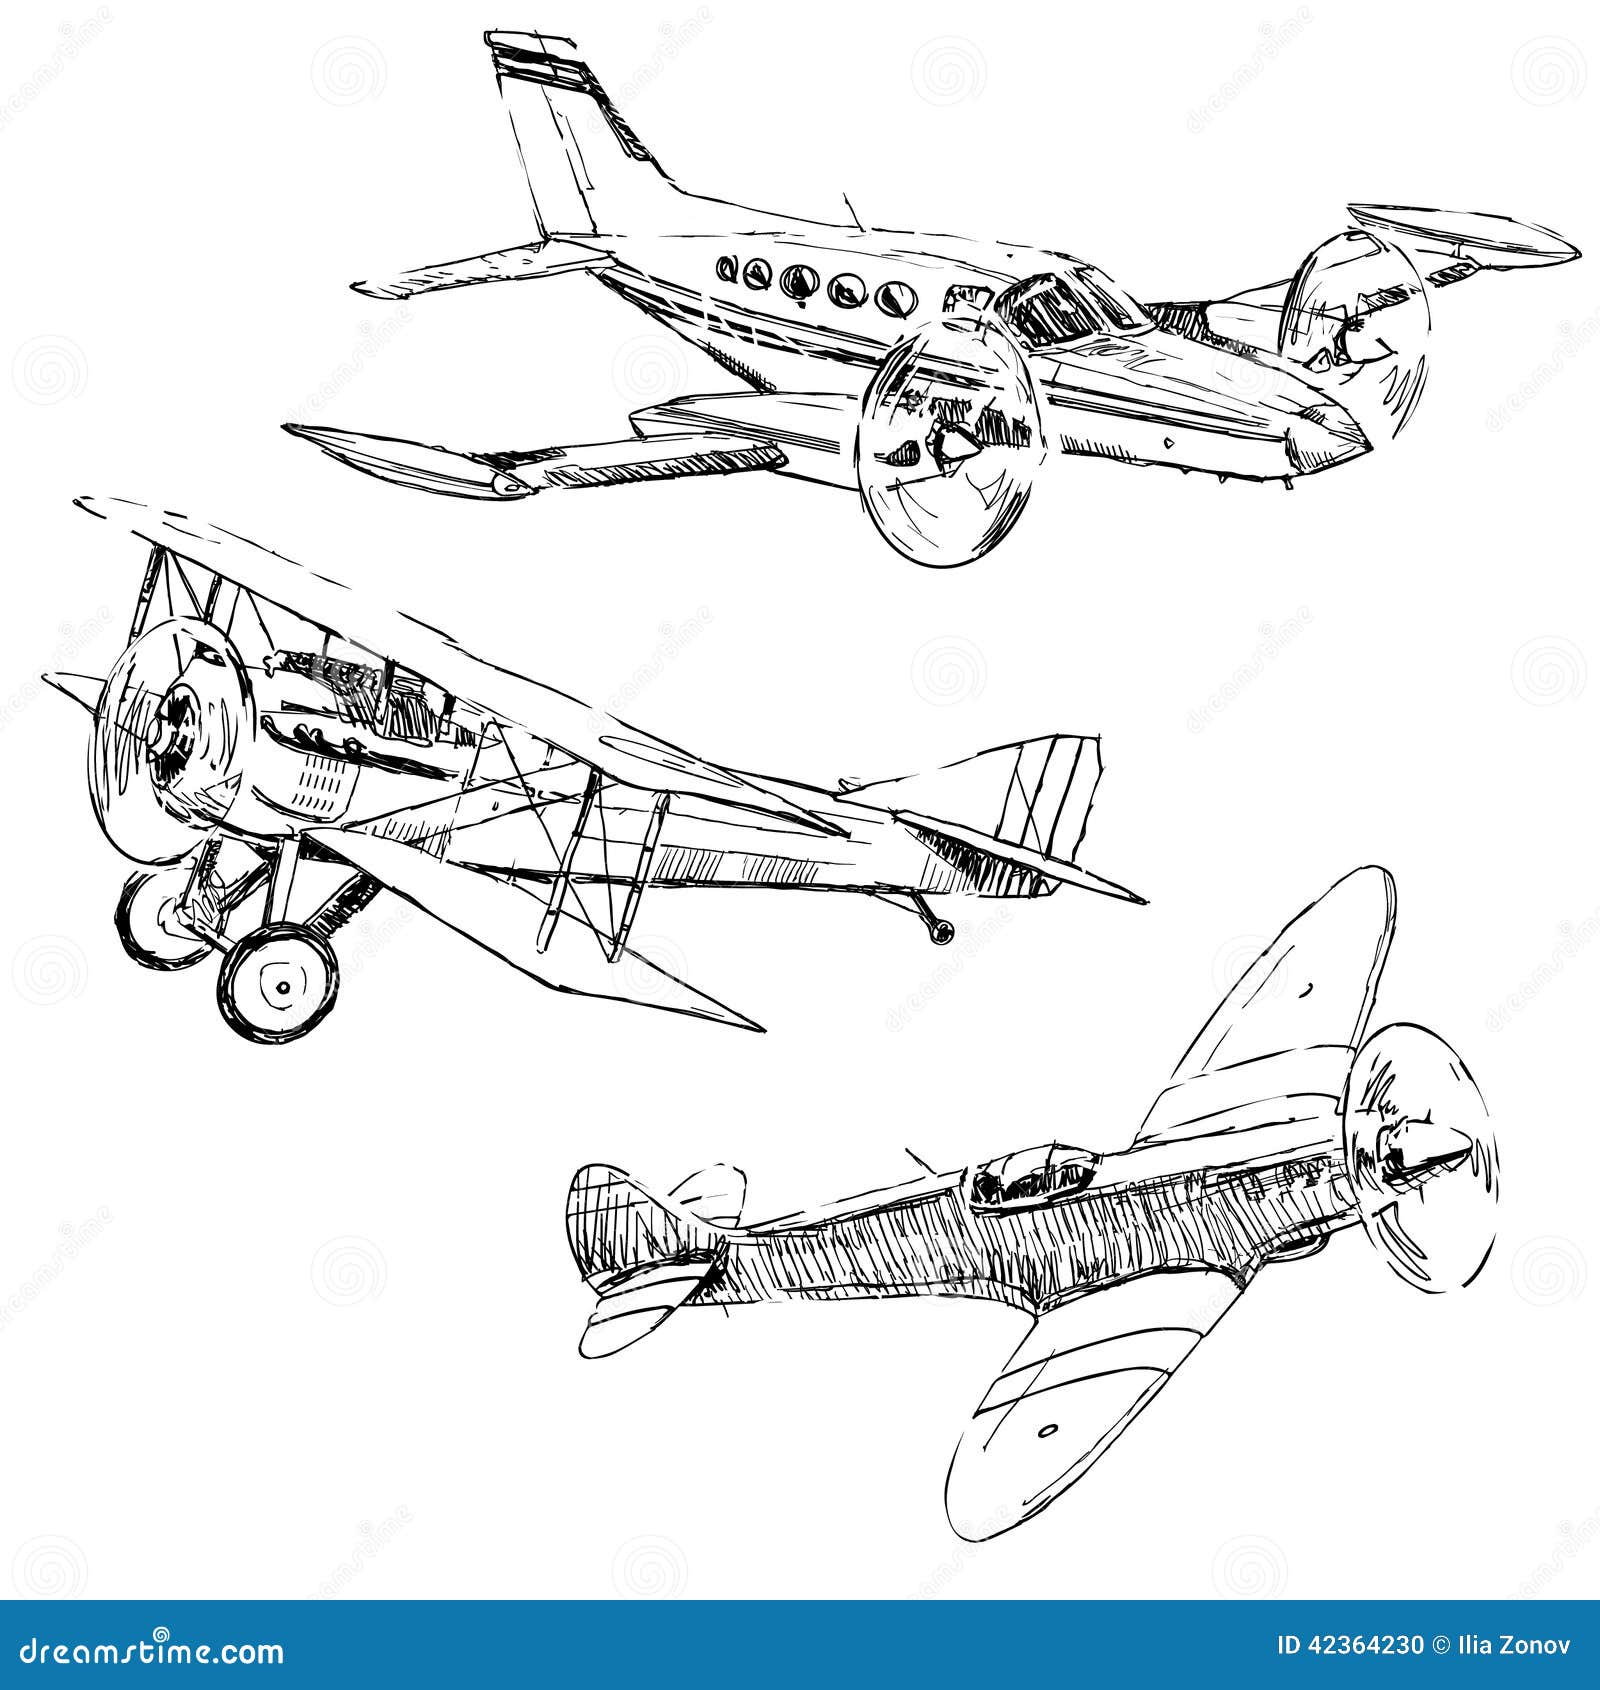 Premium Vector  Set of passenger airplanes corncob or plane aviation  travel illustration engraved hand drawn in old sketch style vintage  transport